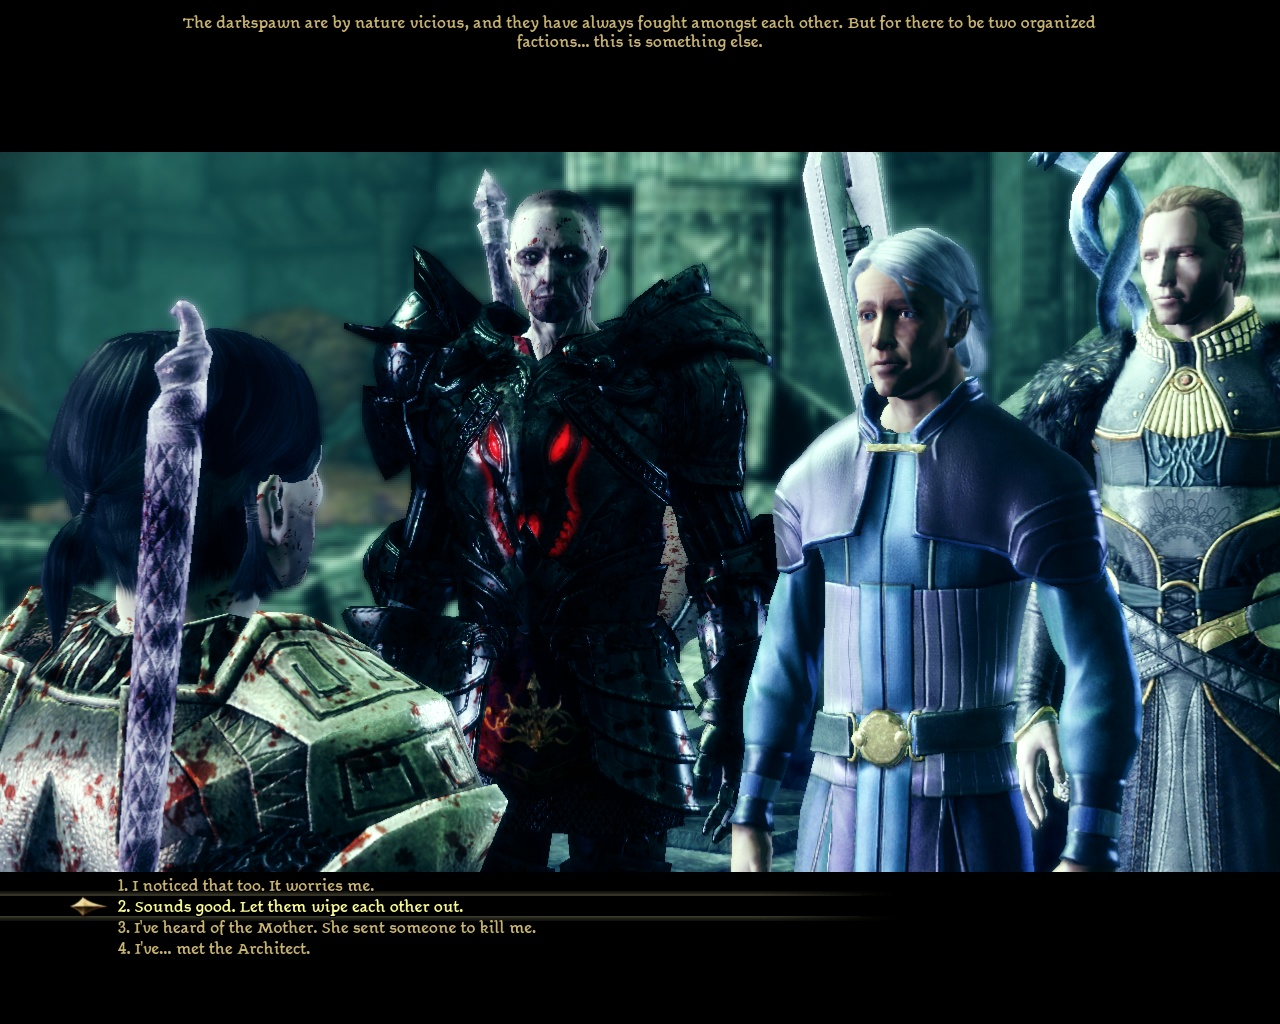 Dragon Age:Origins - Awakening Mtvolne bled tvr a ierne brnenie. Spravodlivos psob nemilosrdne.